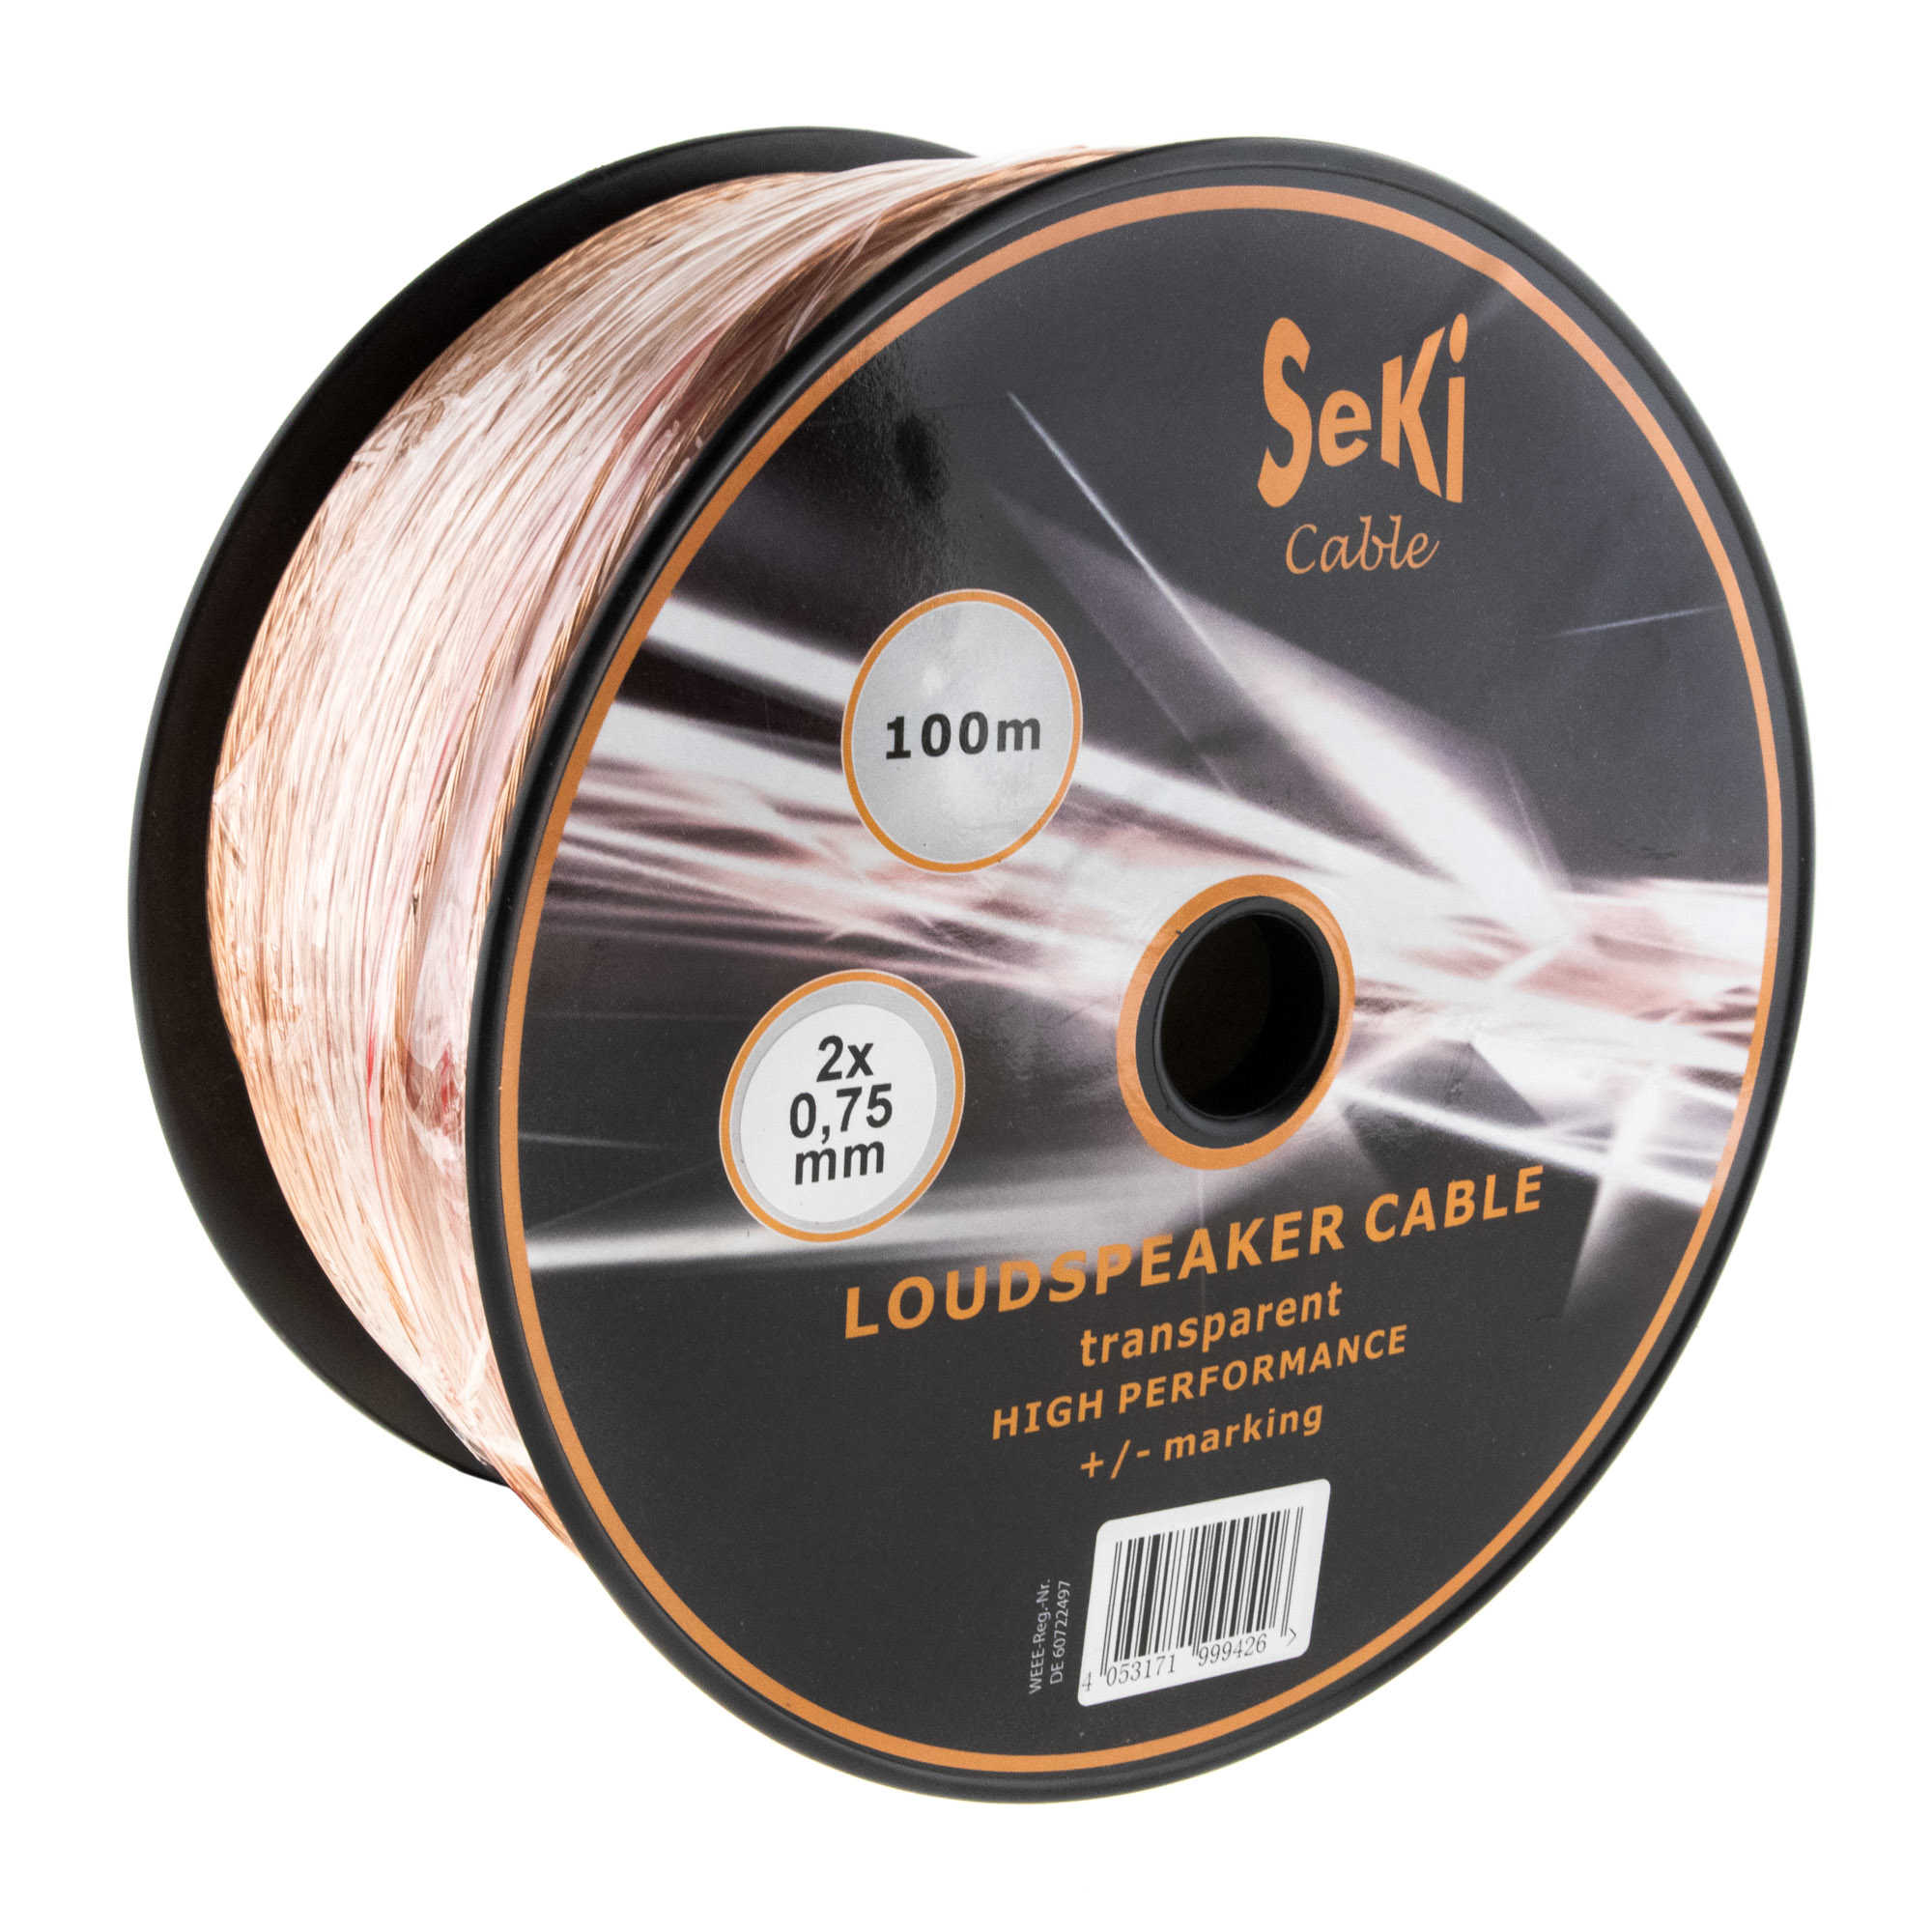 Loudspeaker cable transparent 100m 0.75mm